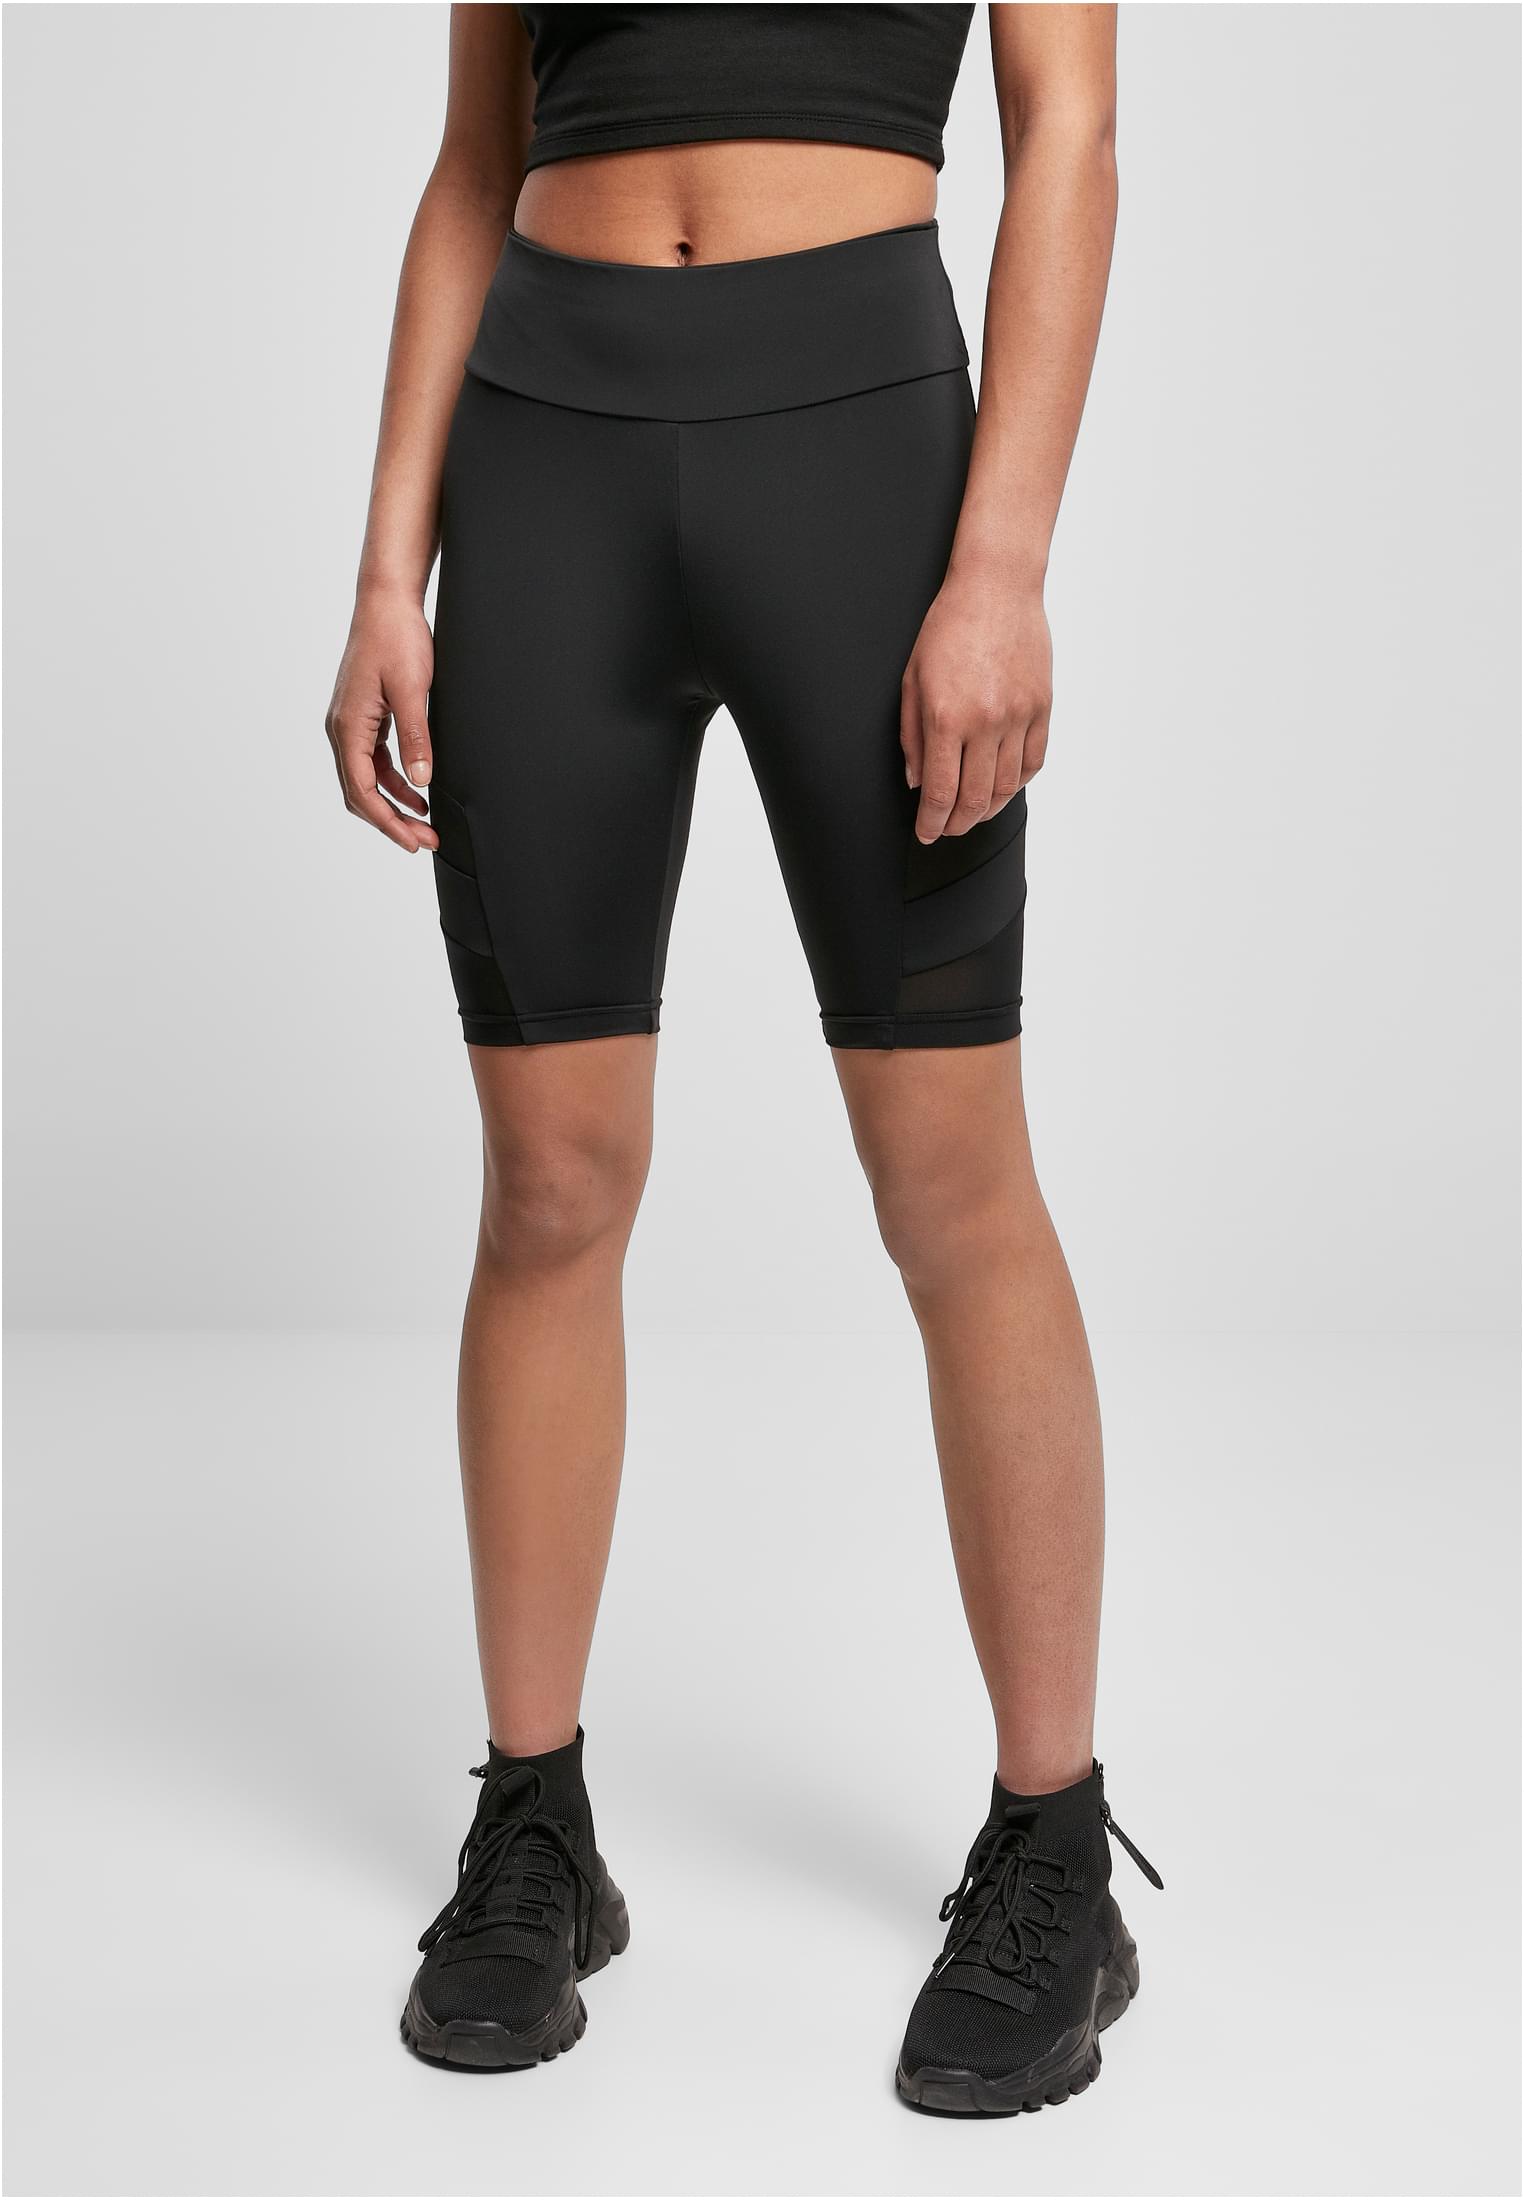 Women's High Waist Tech Mesh Cycle Shorts, Black